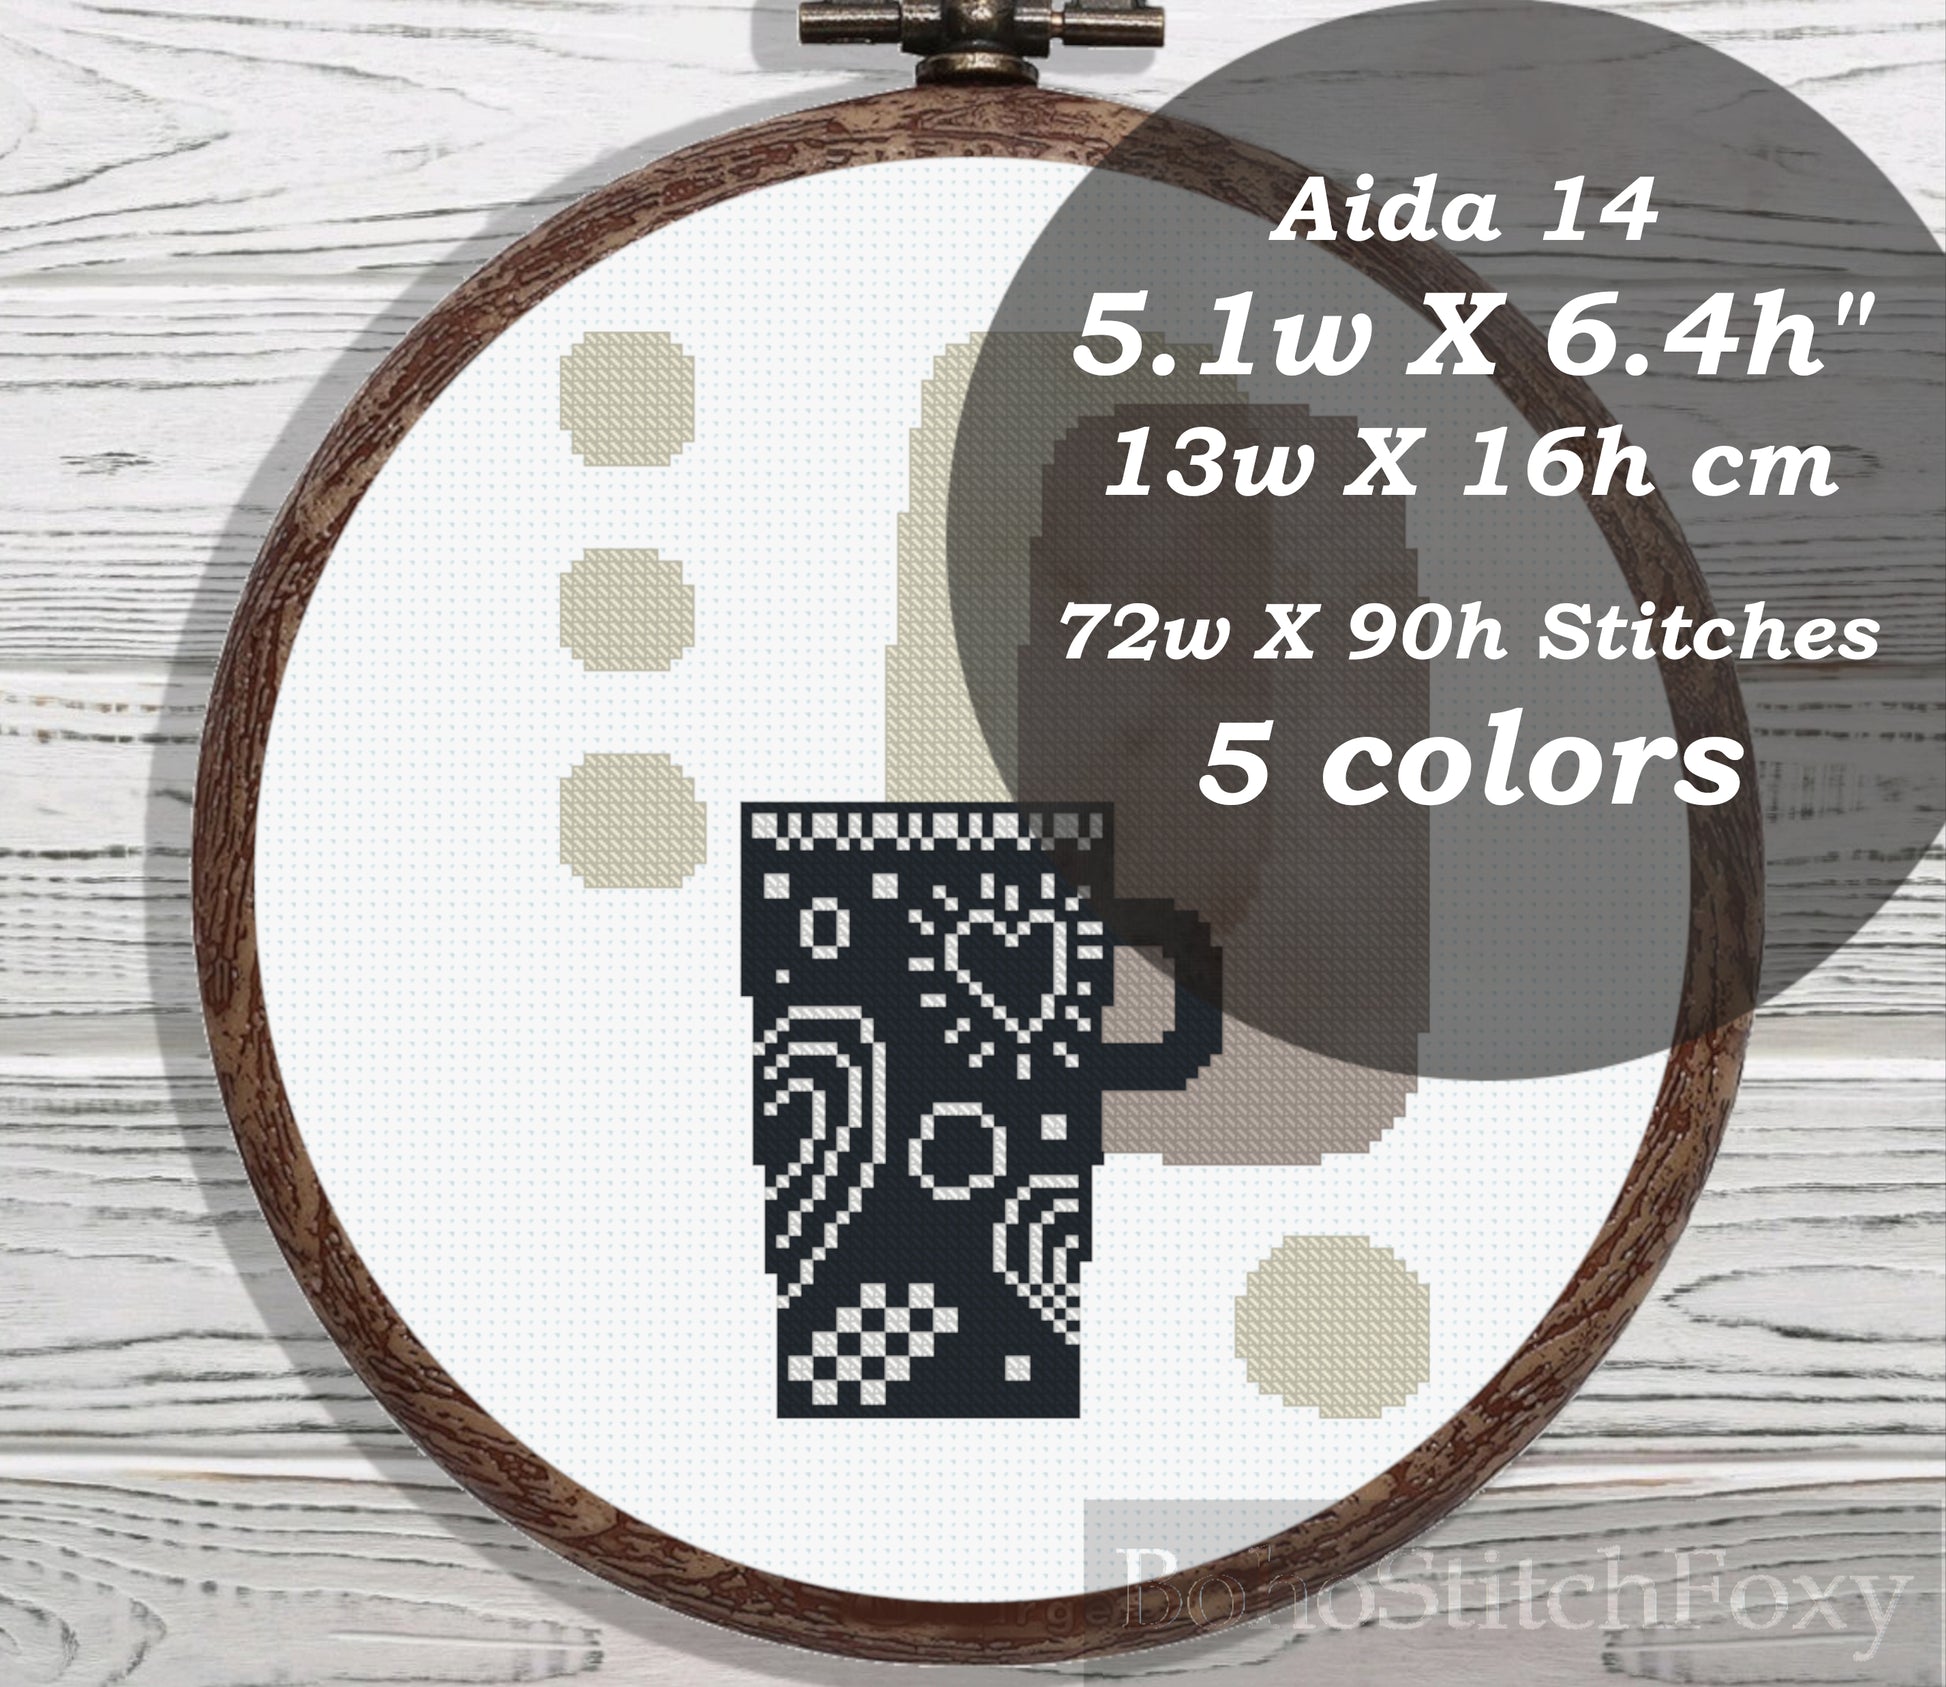 Boho tea cup cross stitch pattern